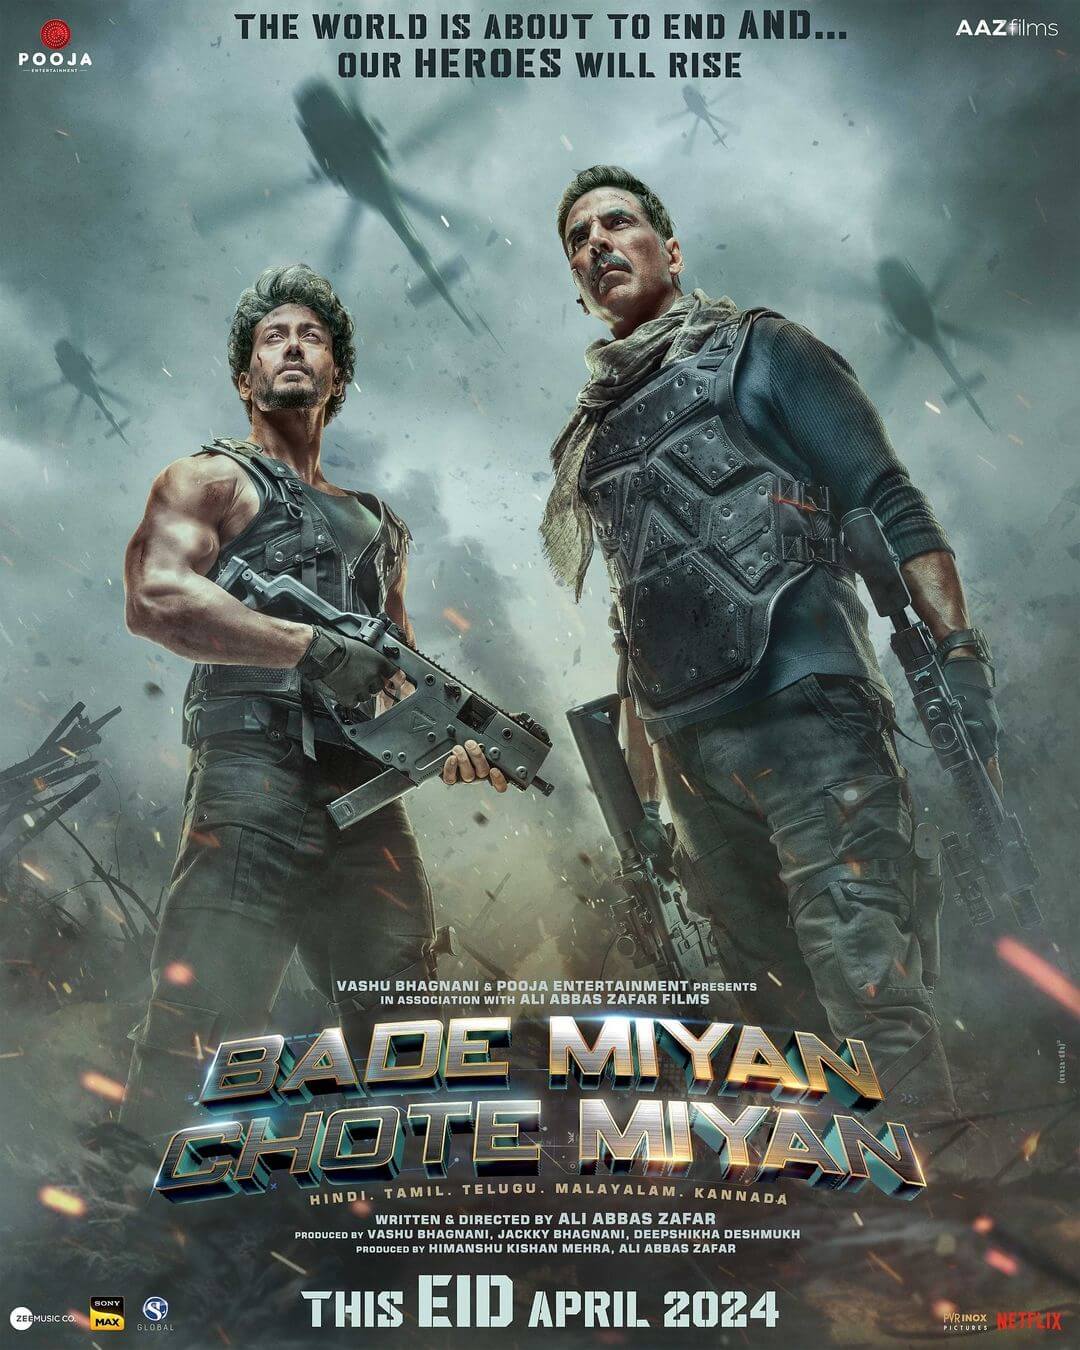 Bade Miyan Chote Miyan Movie Poster